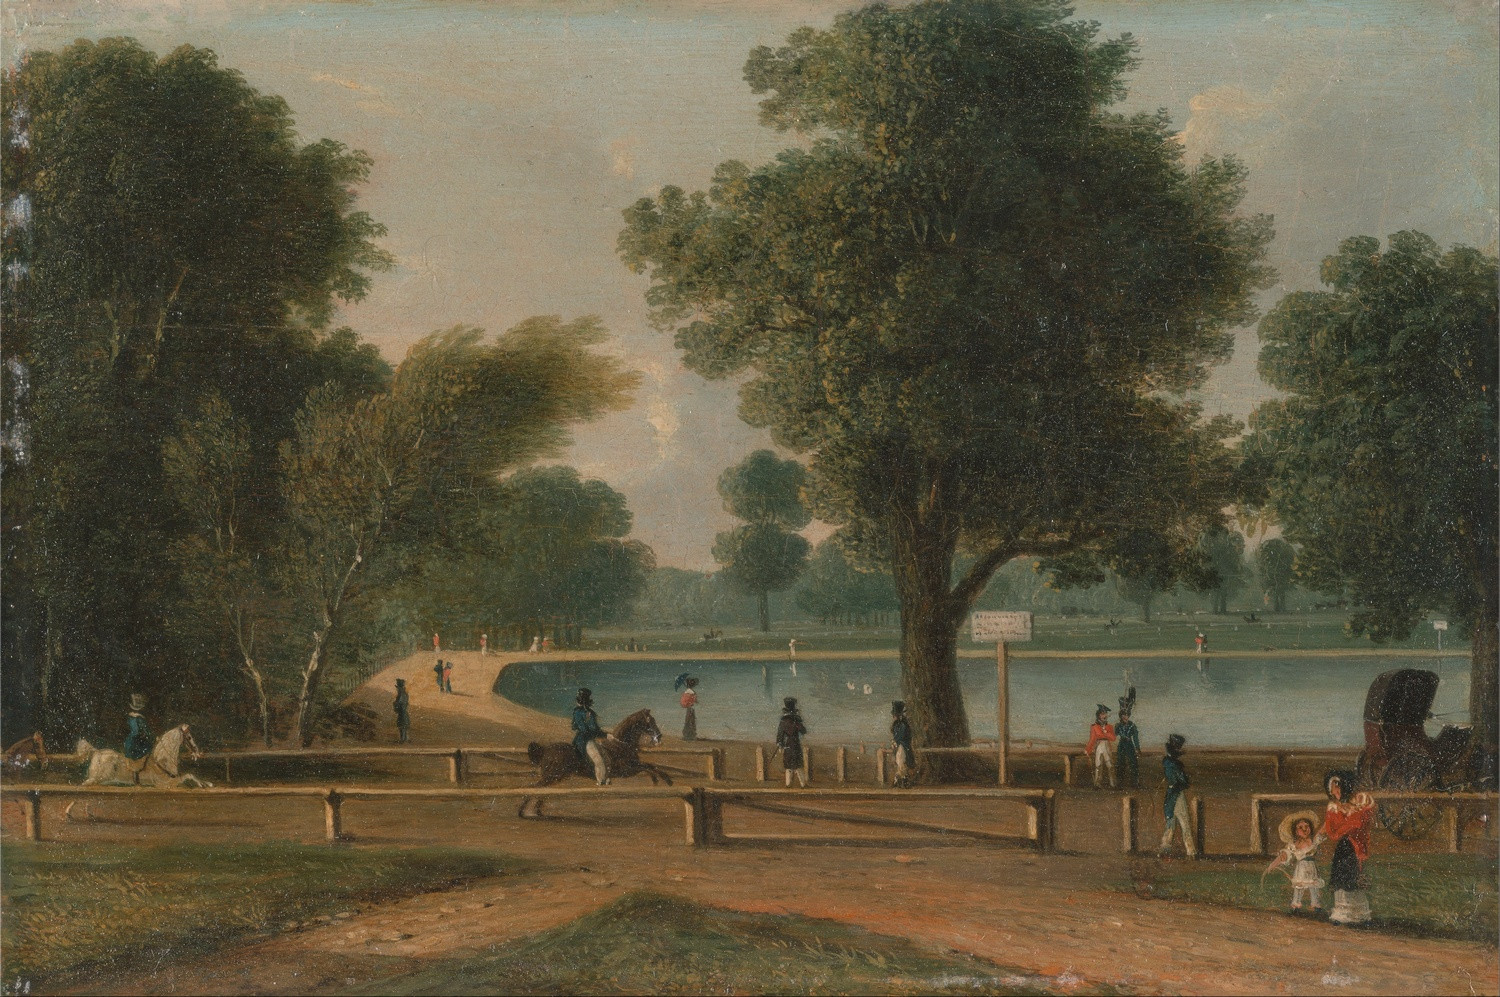 Гайд-парк, картина работы Джорджа Сидни Шеперда, середина 19 века